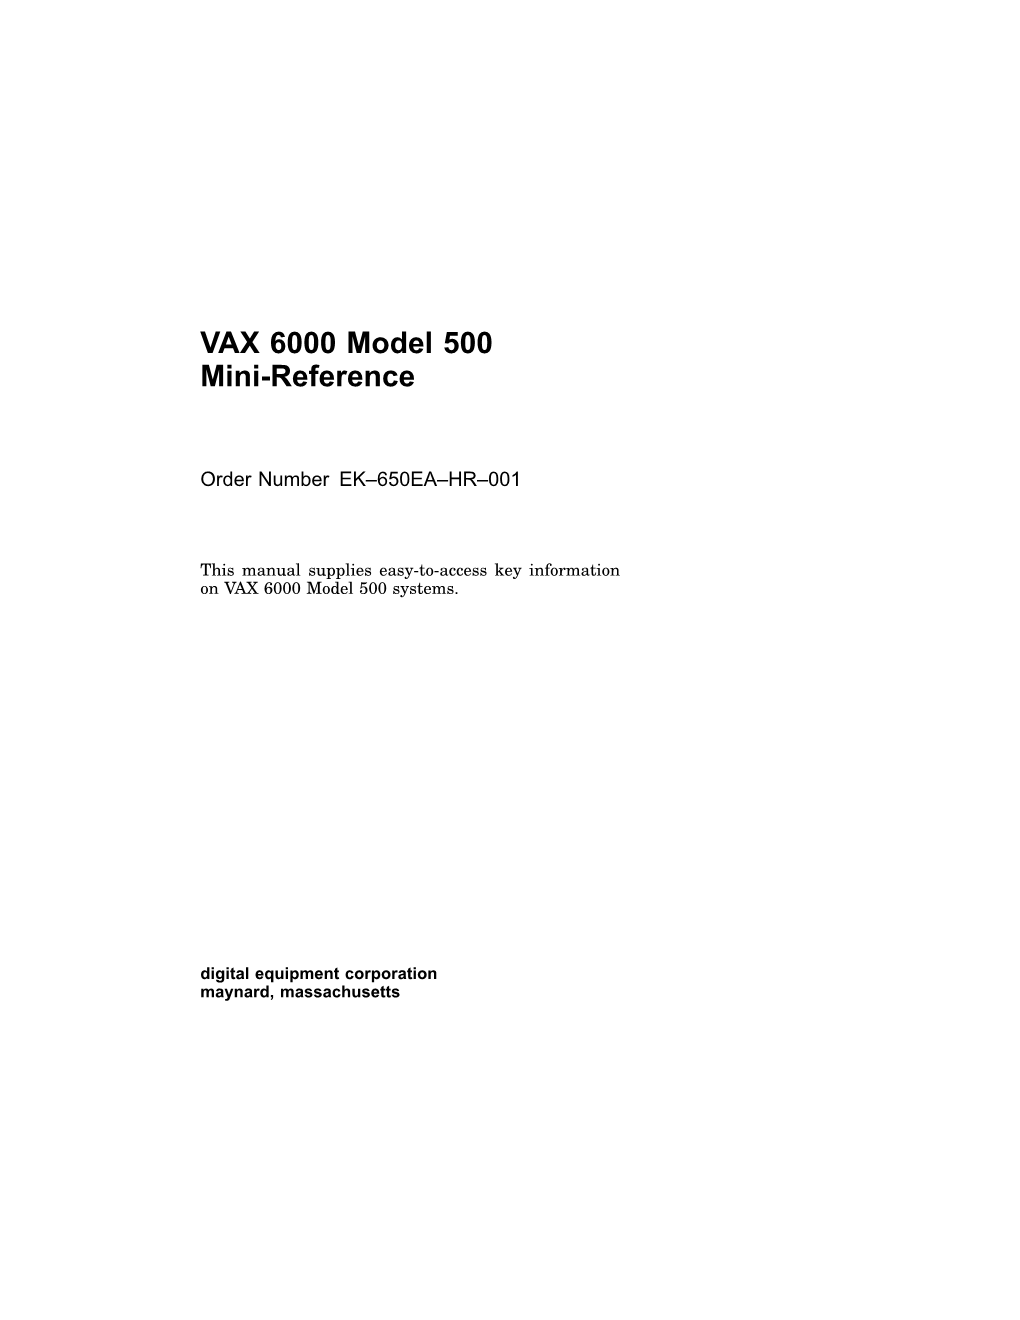 VAX 6000 Model 500 Mini-Reference